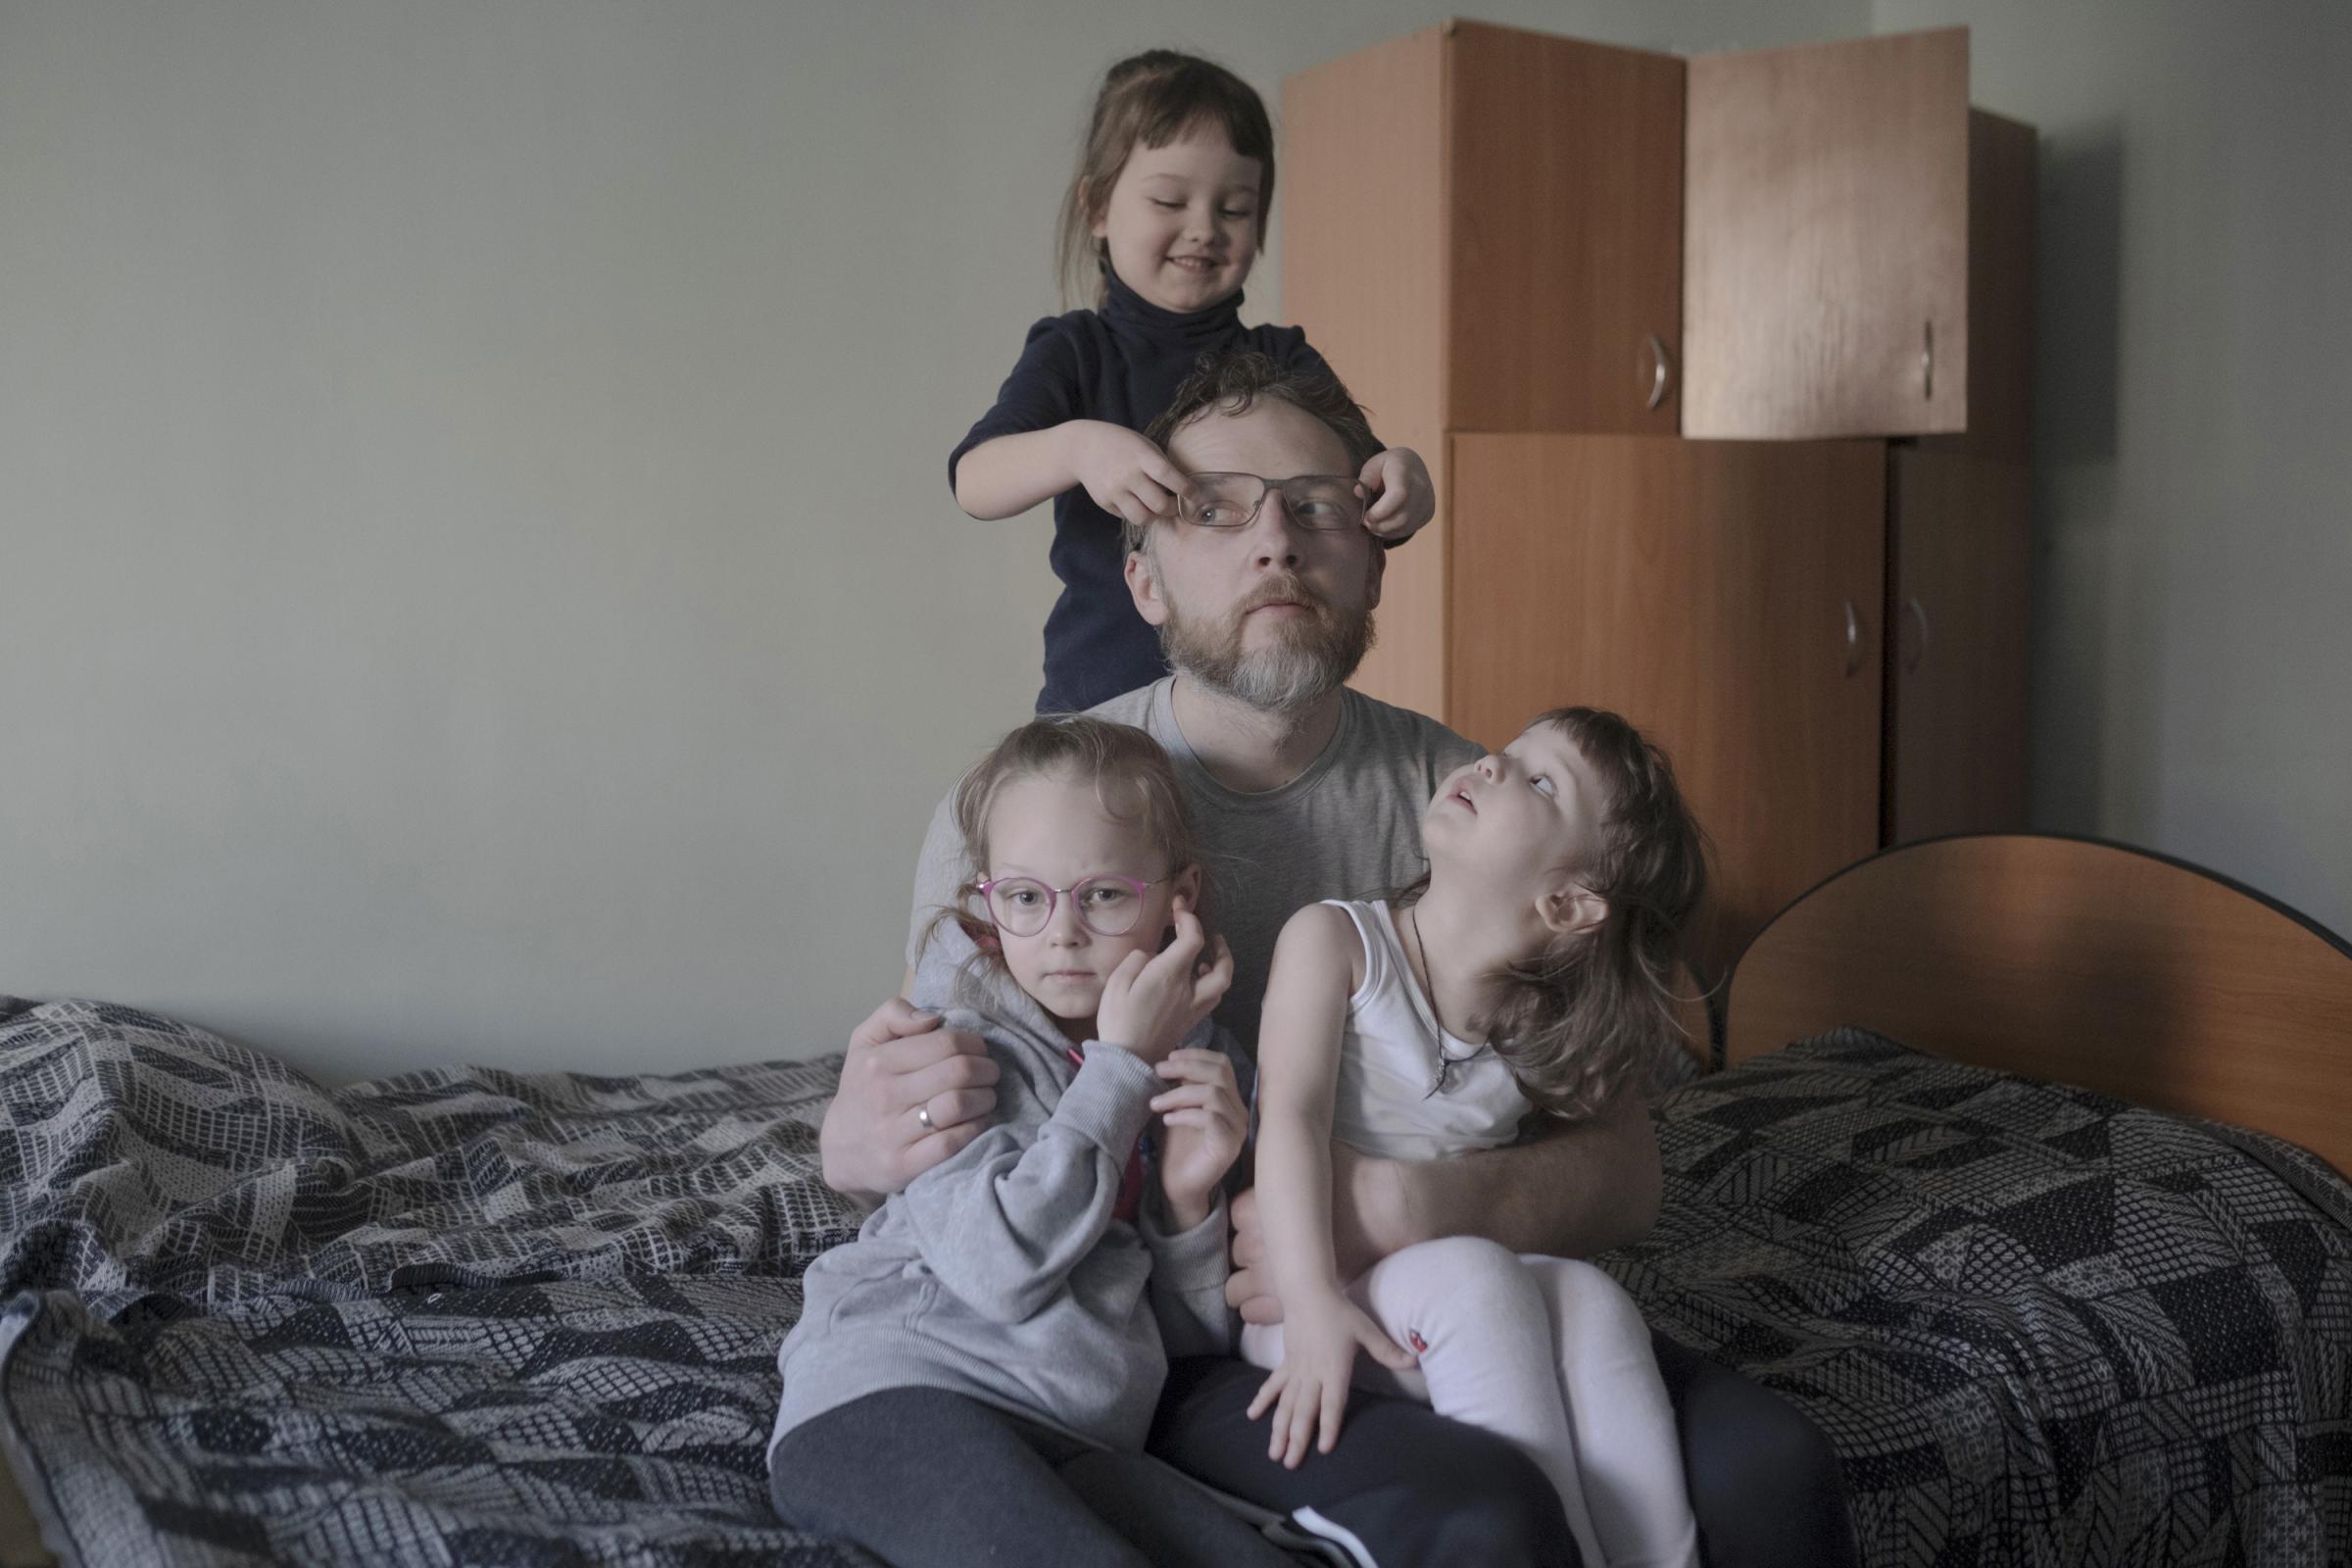 Migration crisis in Moldova - Sasha (38) with children, Odessa  “We made the final...